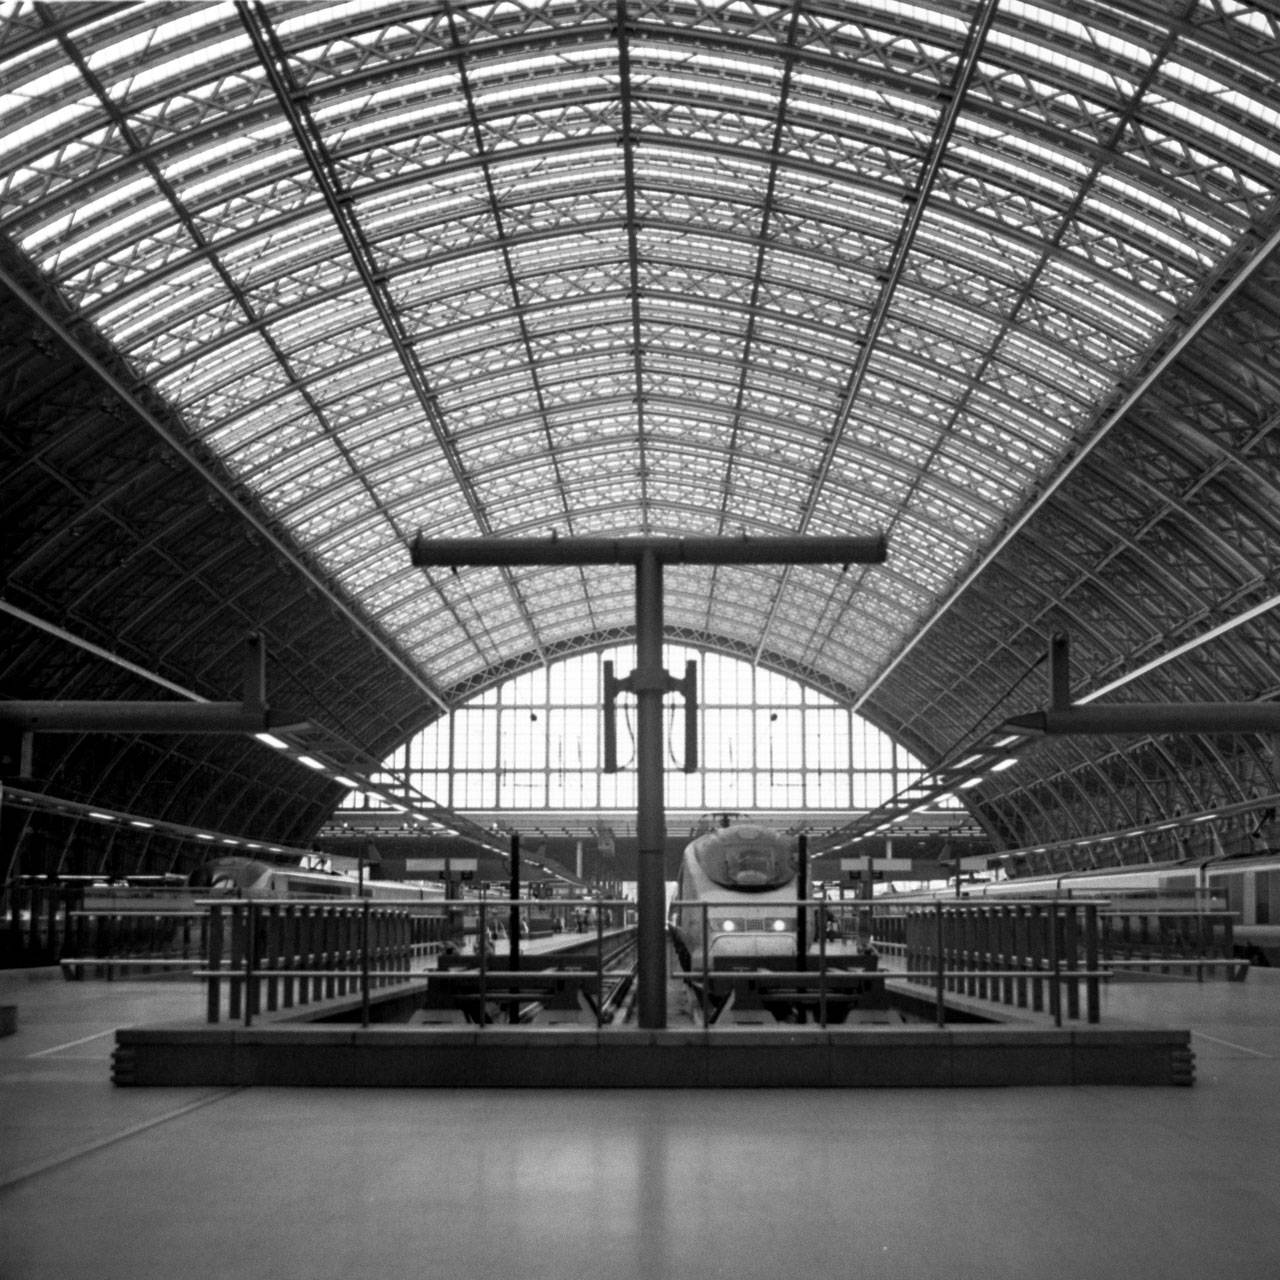 Train station hangar